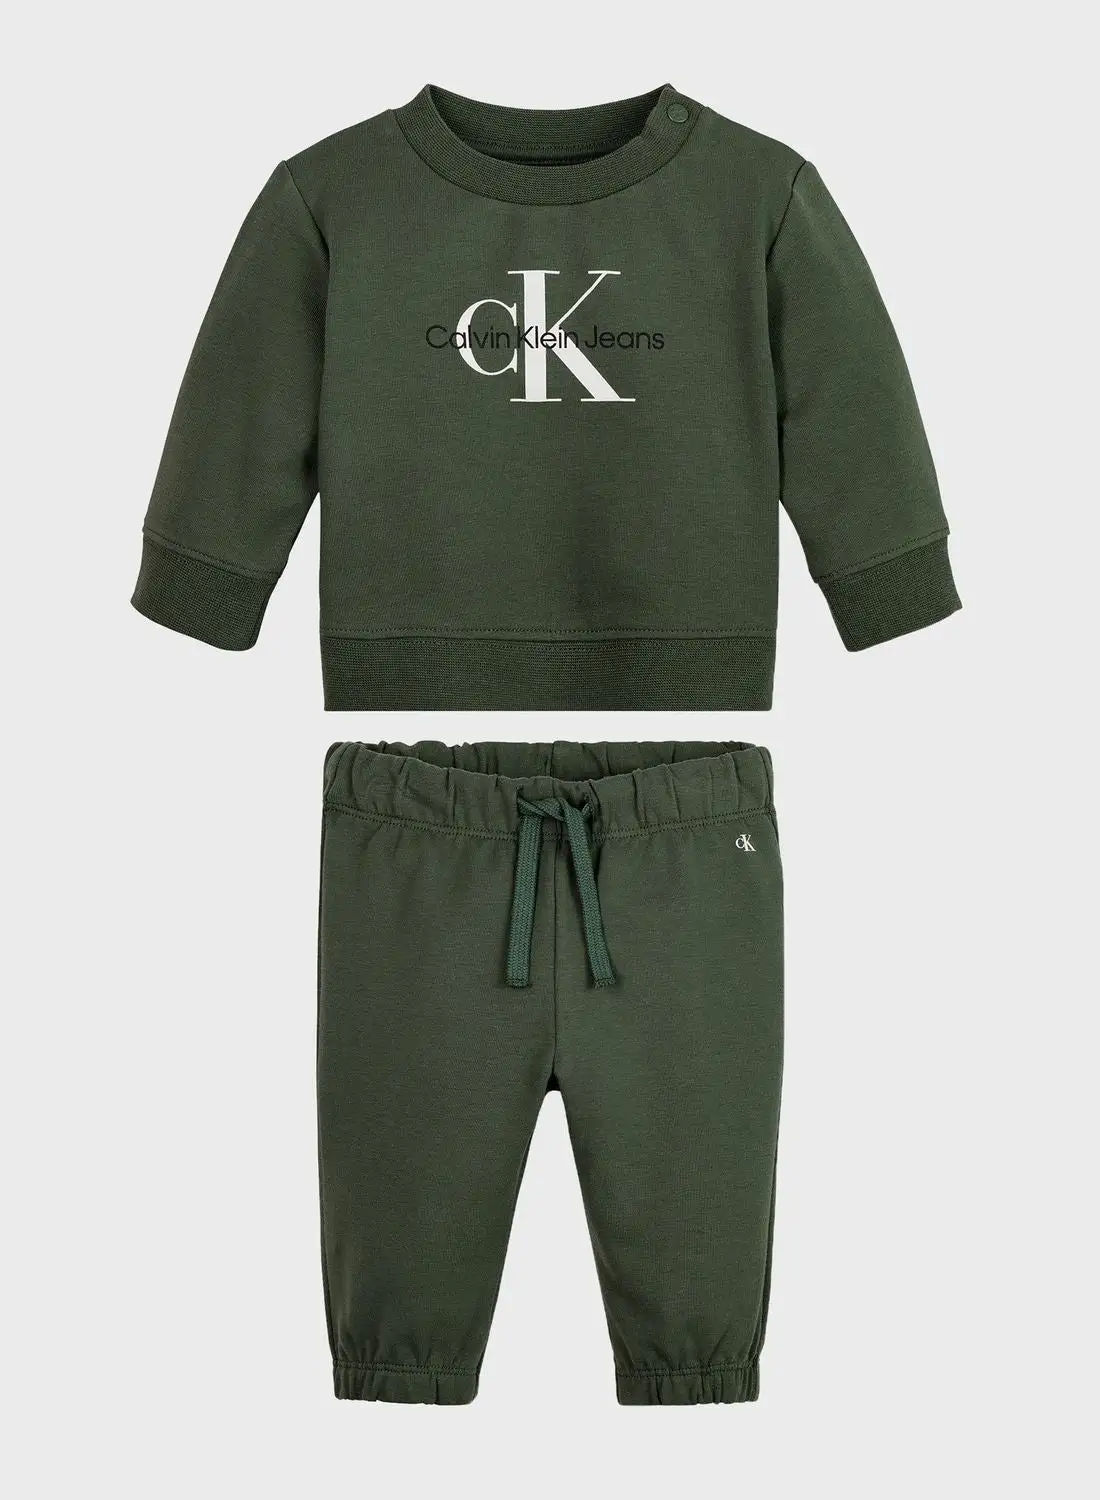 Calvin Klein Jeans Infant Logo Sweatshirt Set